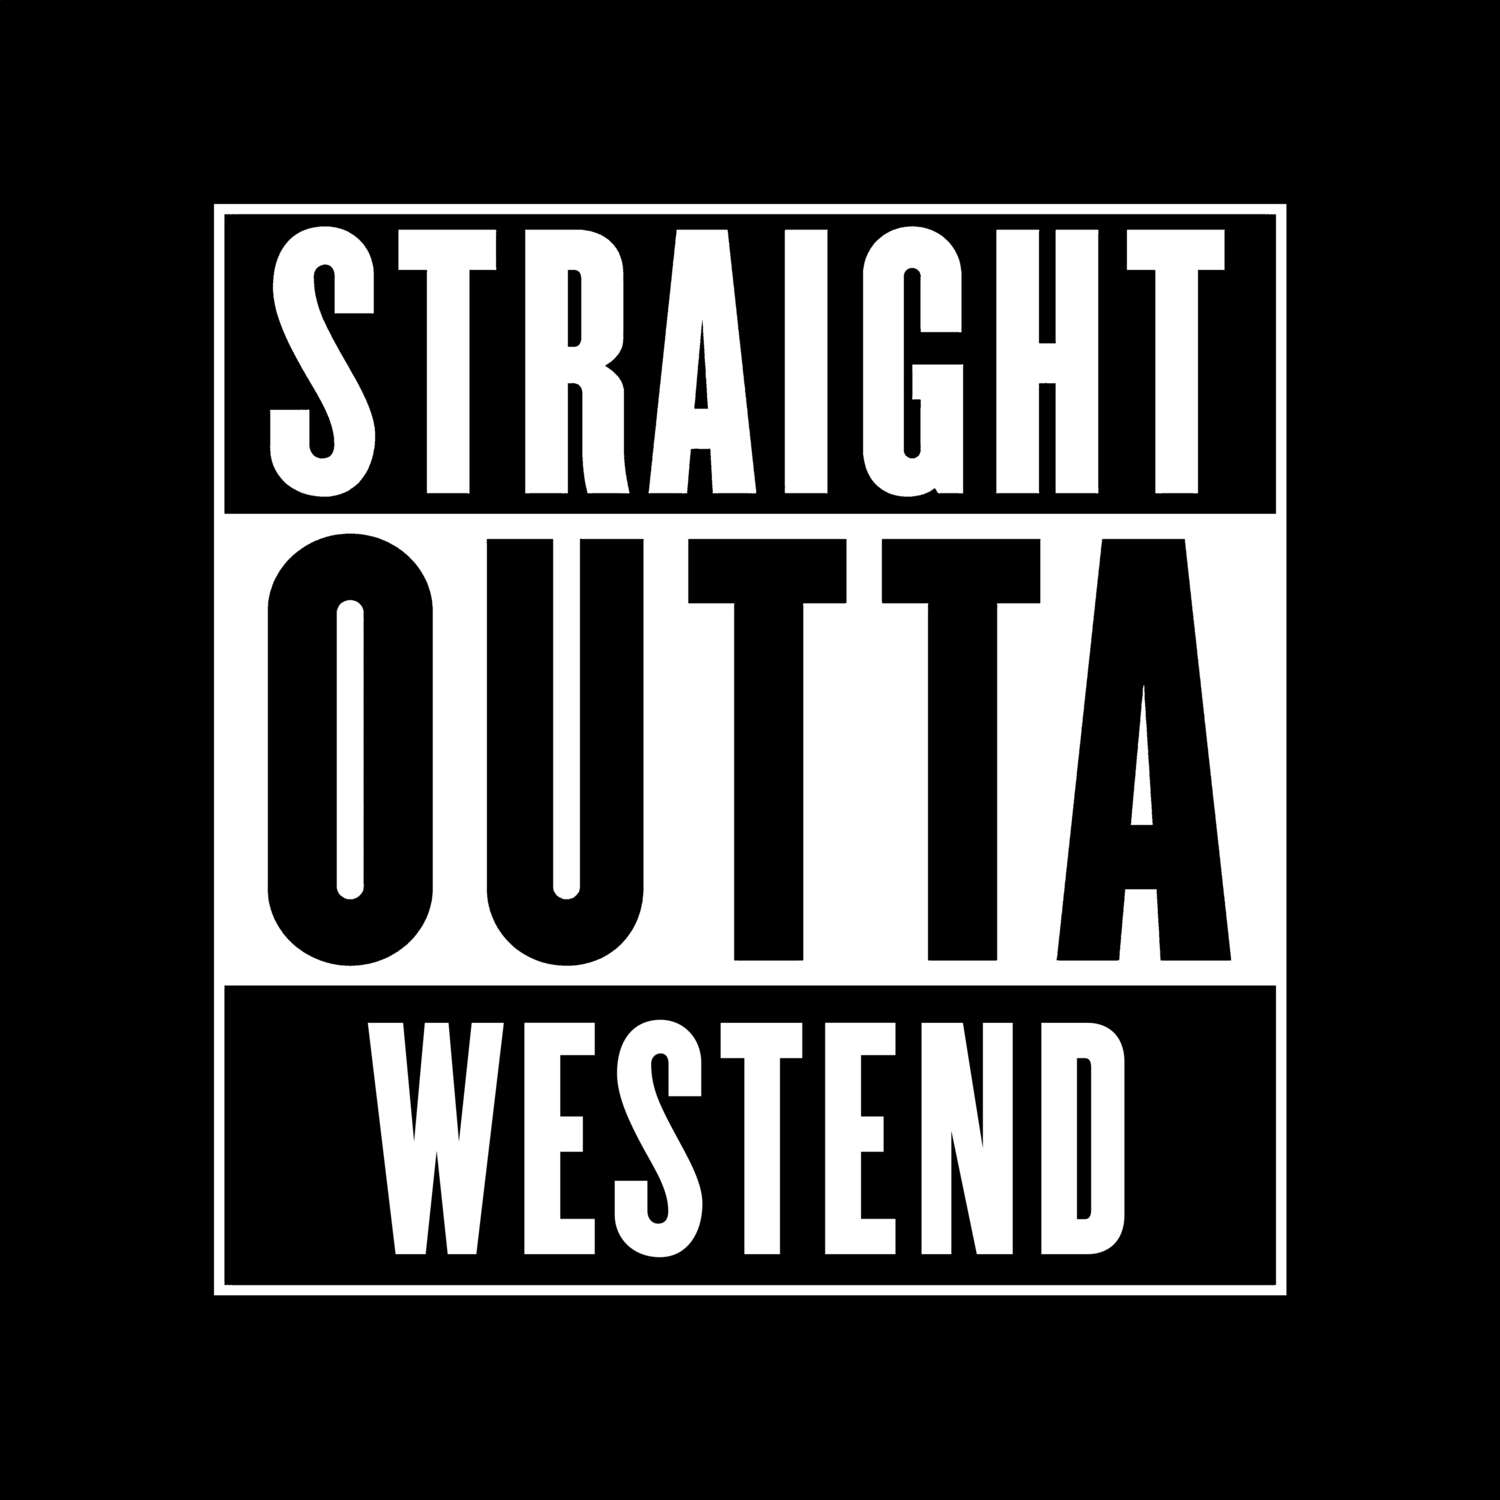 Westend T-Shirt »Straight Outta«